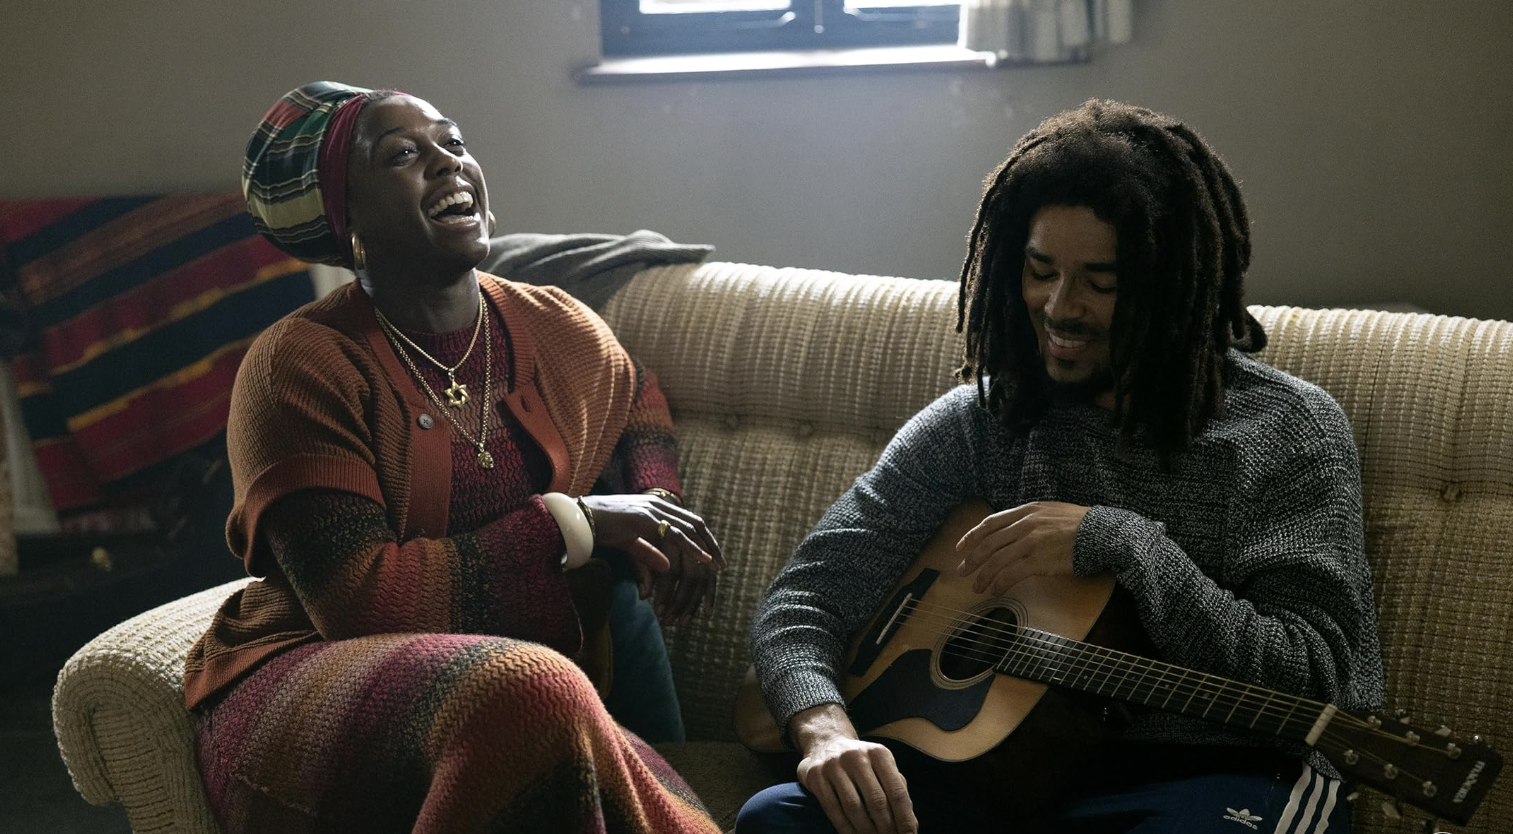 Lashana Lynch as Rita Marley and Kingsley Ben-Adir as Bob Marley laugh together on a couch.